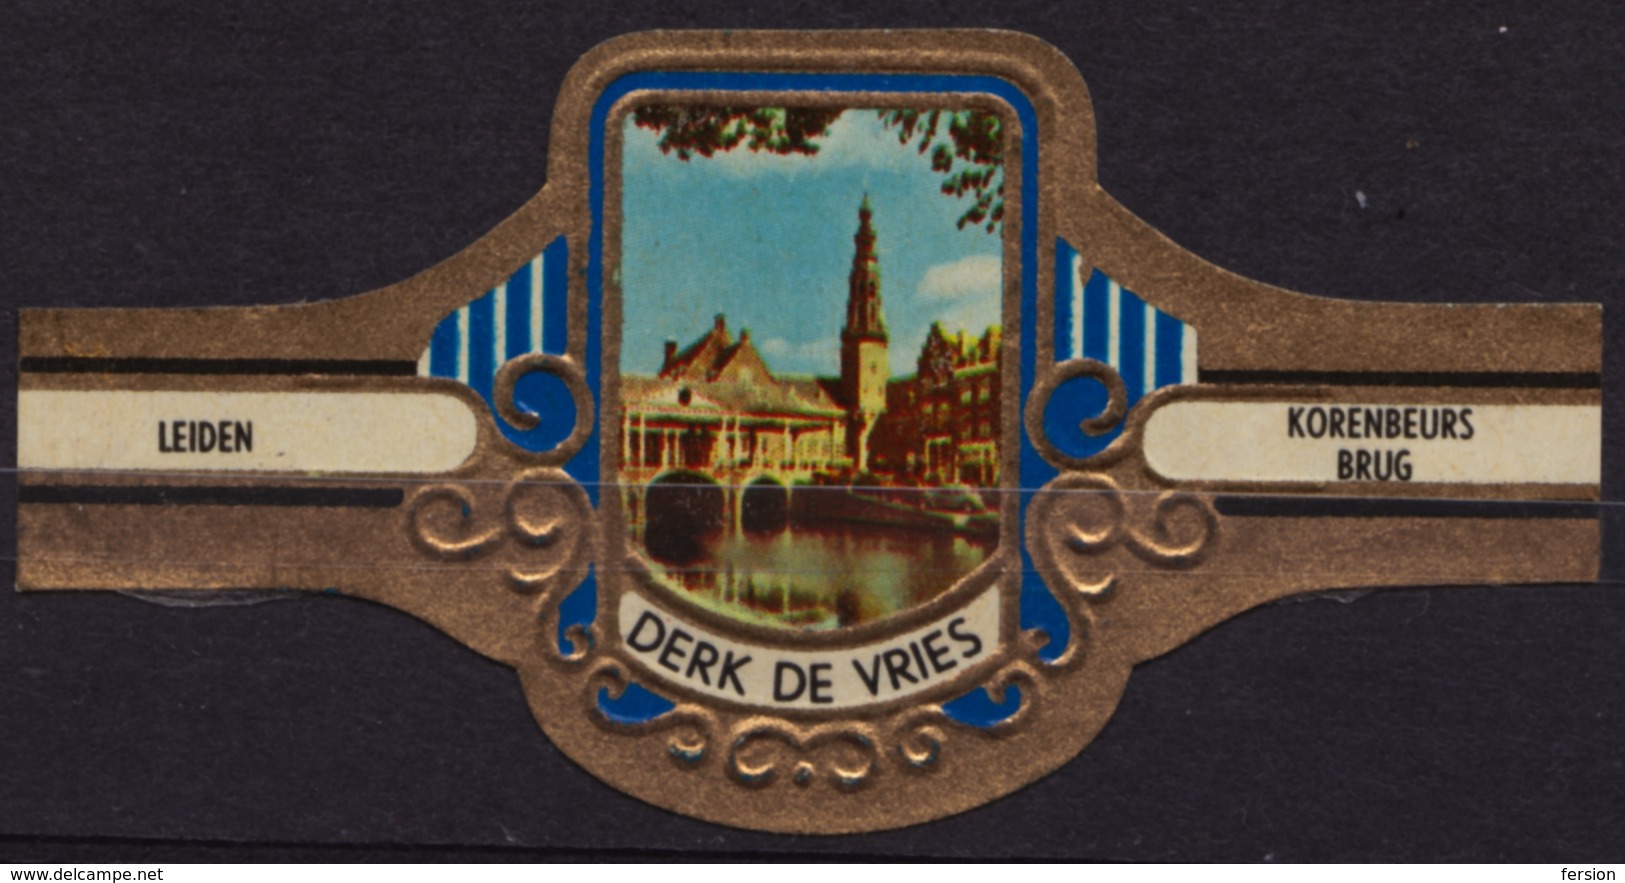 Leiden Netherlands Korenbeurs Brug Bridge - Derk De Vries - Netherlands - CIGAR CIGARS Label Vignette - Etiquetas